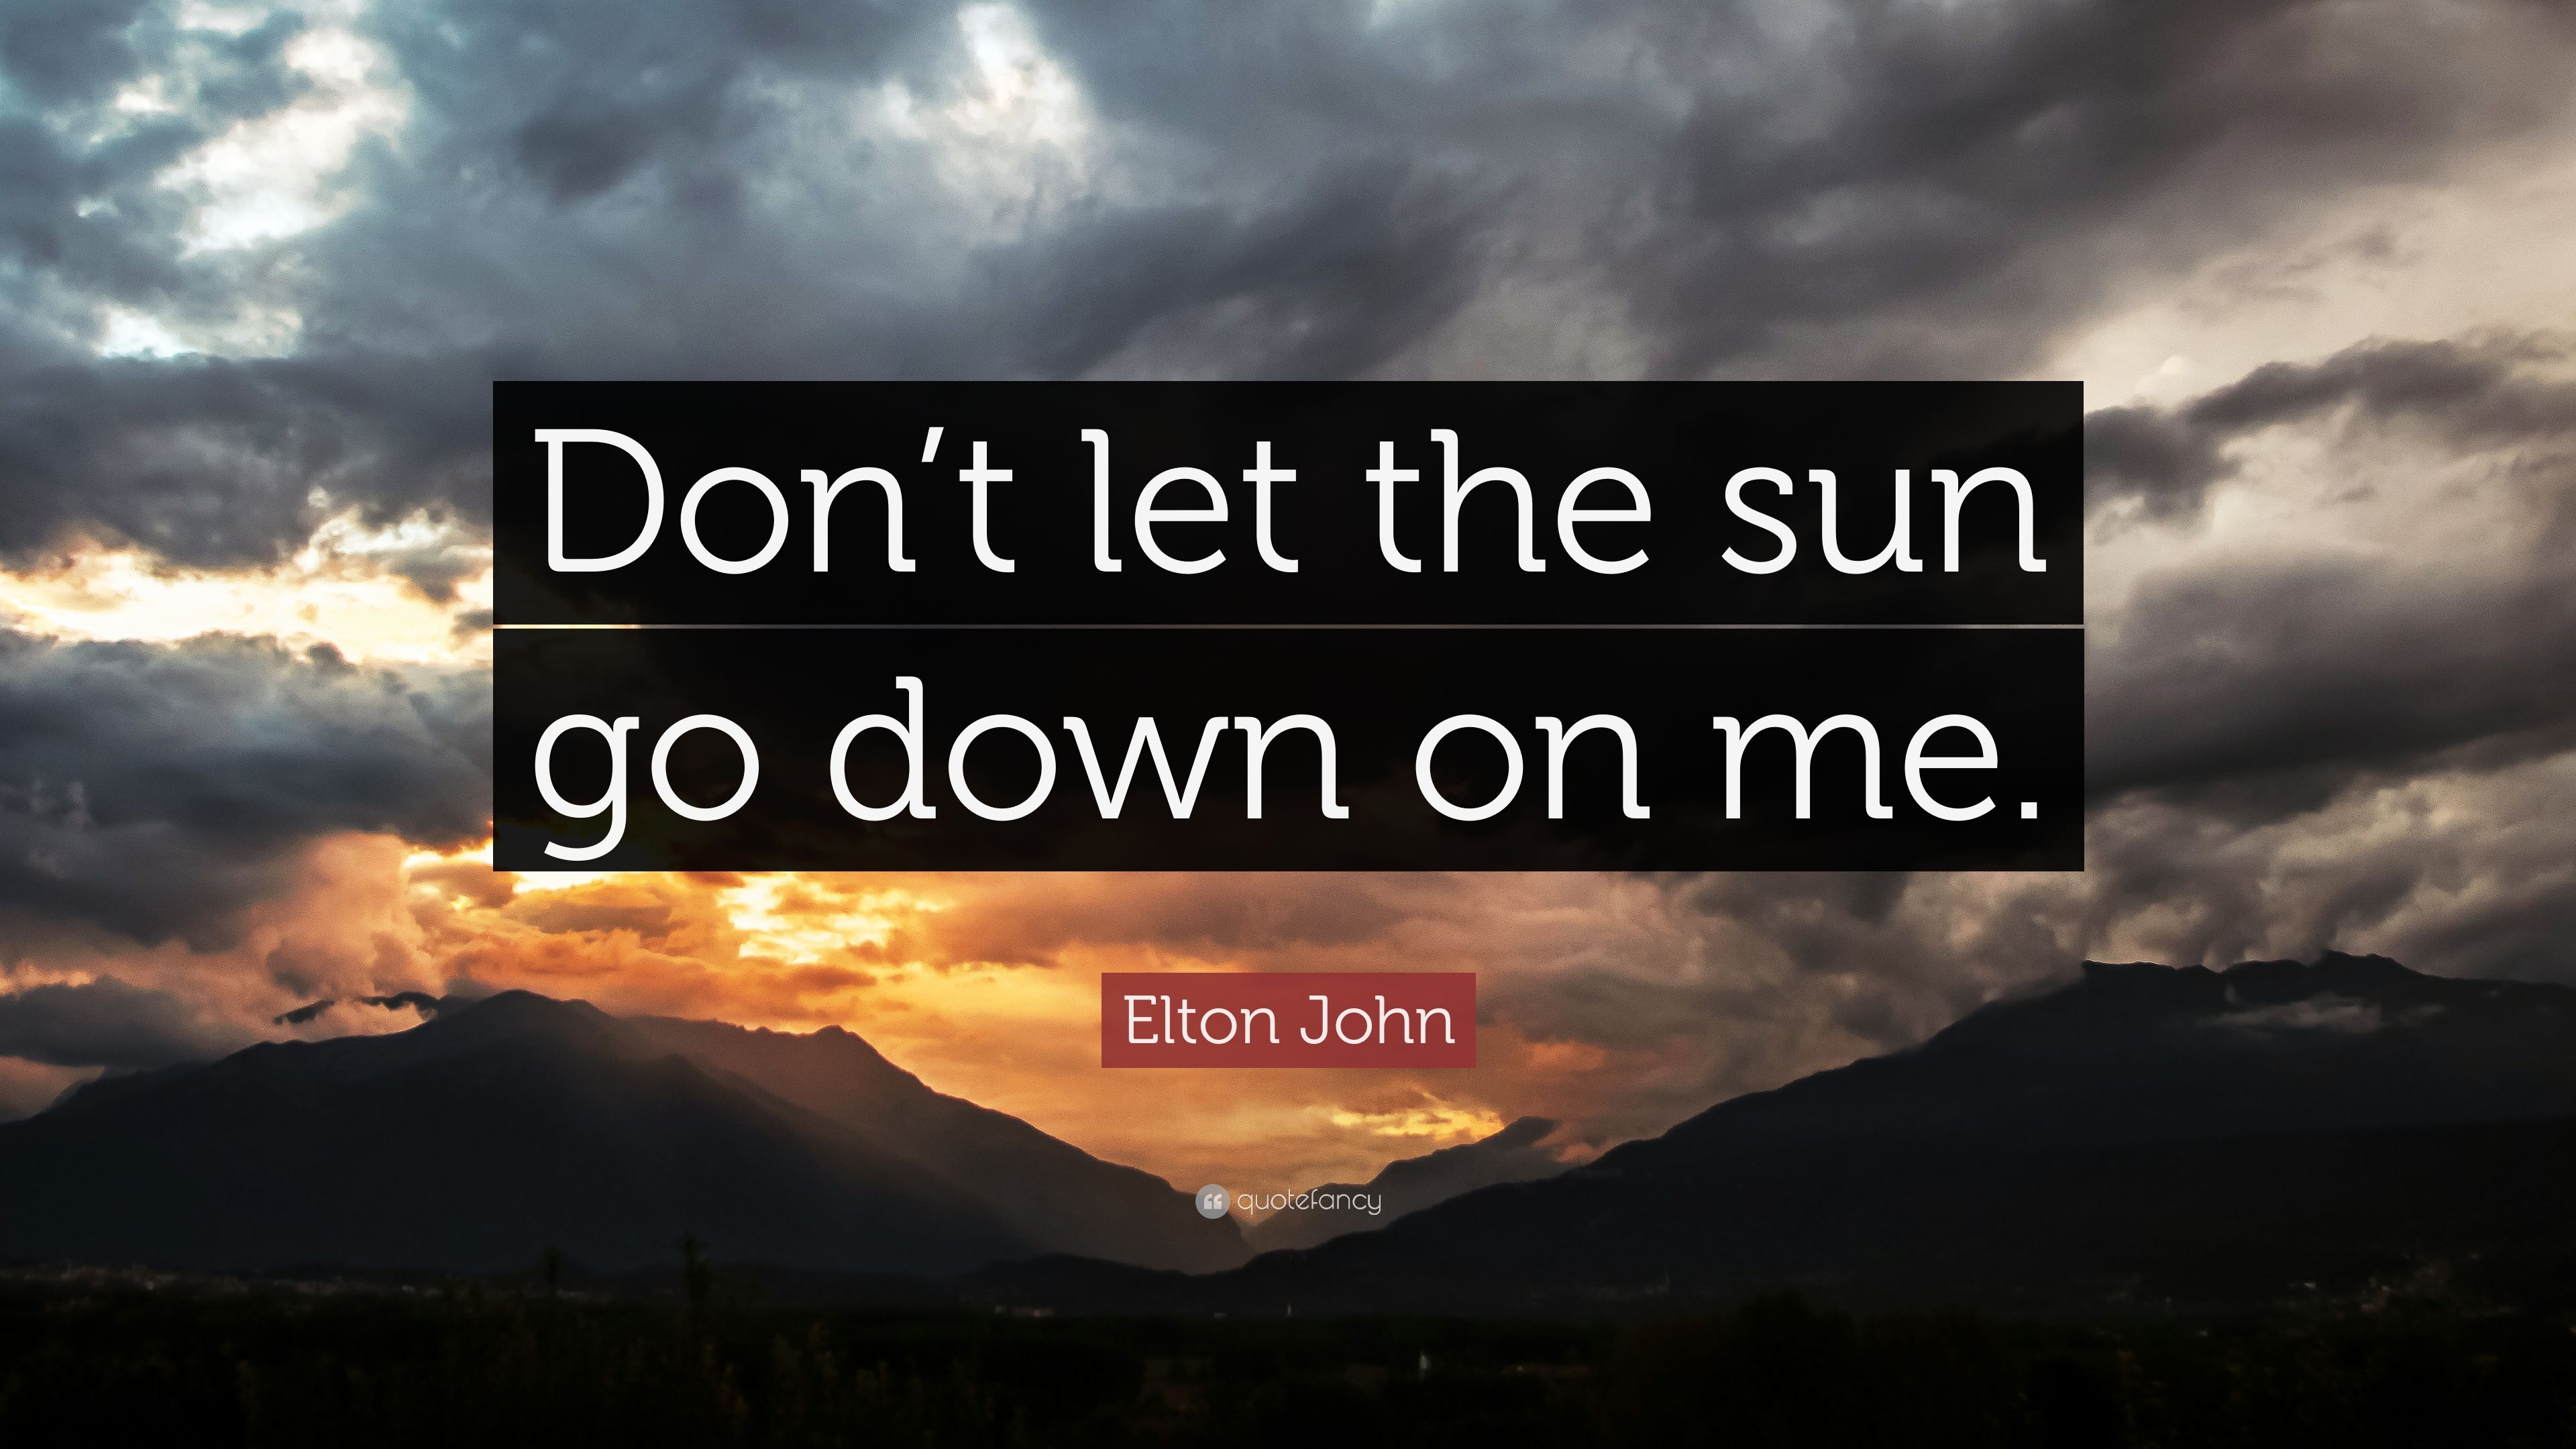 Elton John Quote: “Don't let the sun go down on me.” (12 wallpaper)